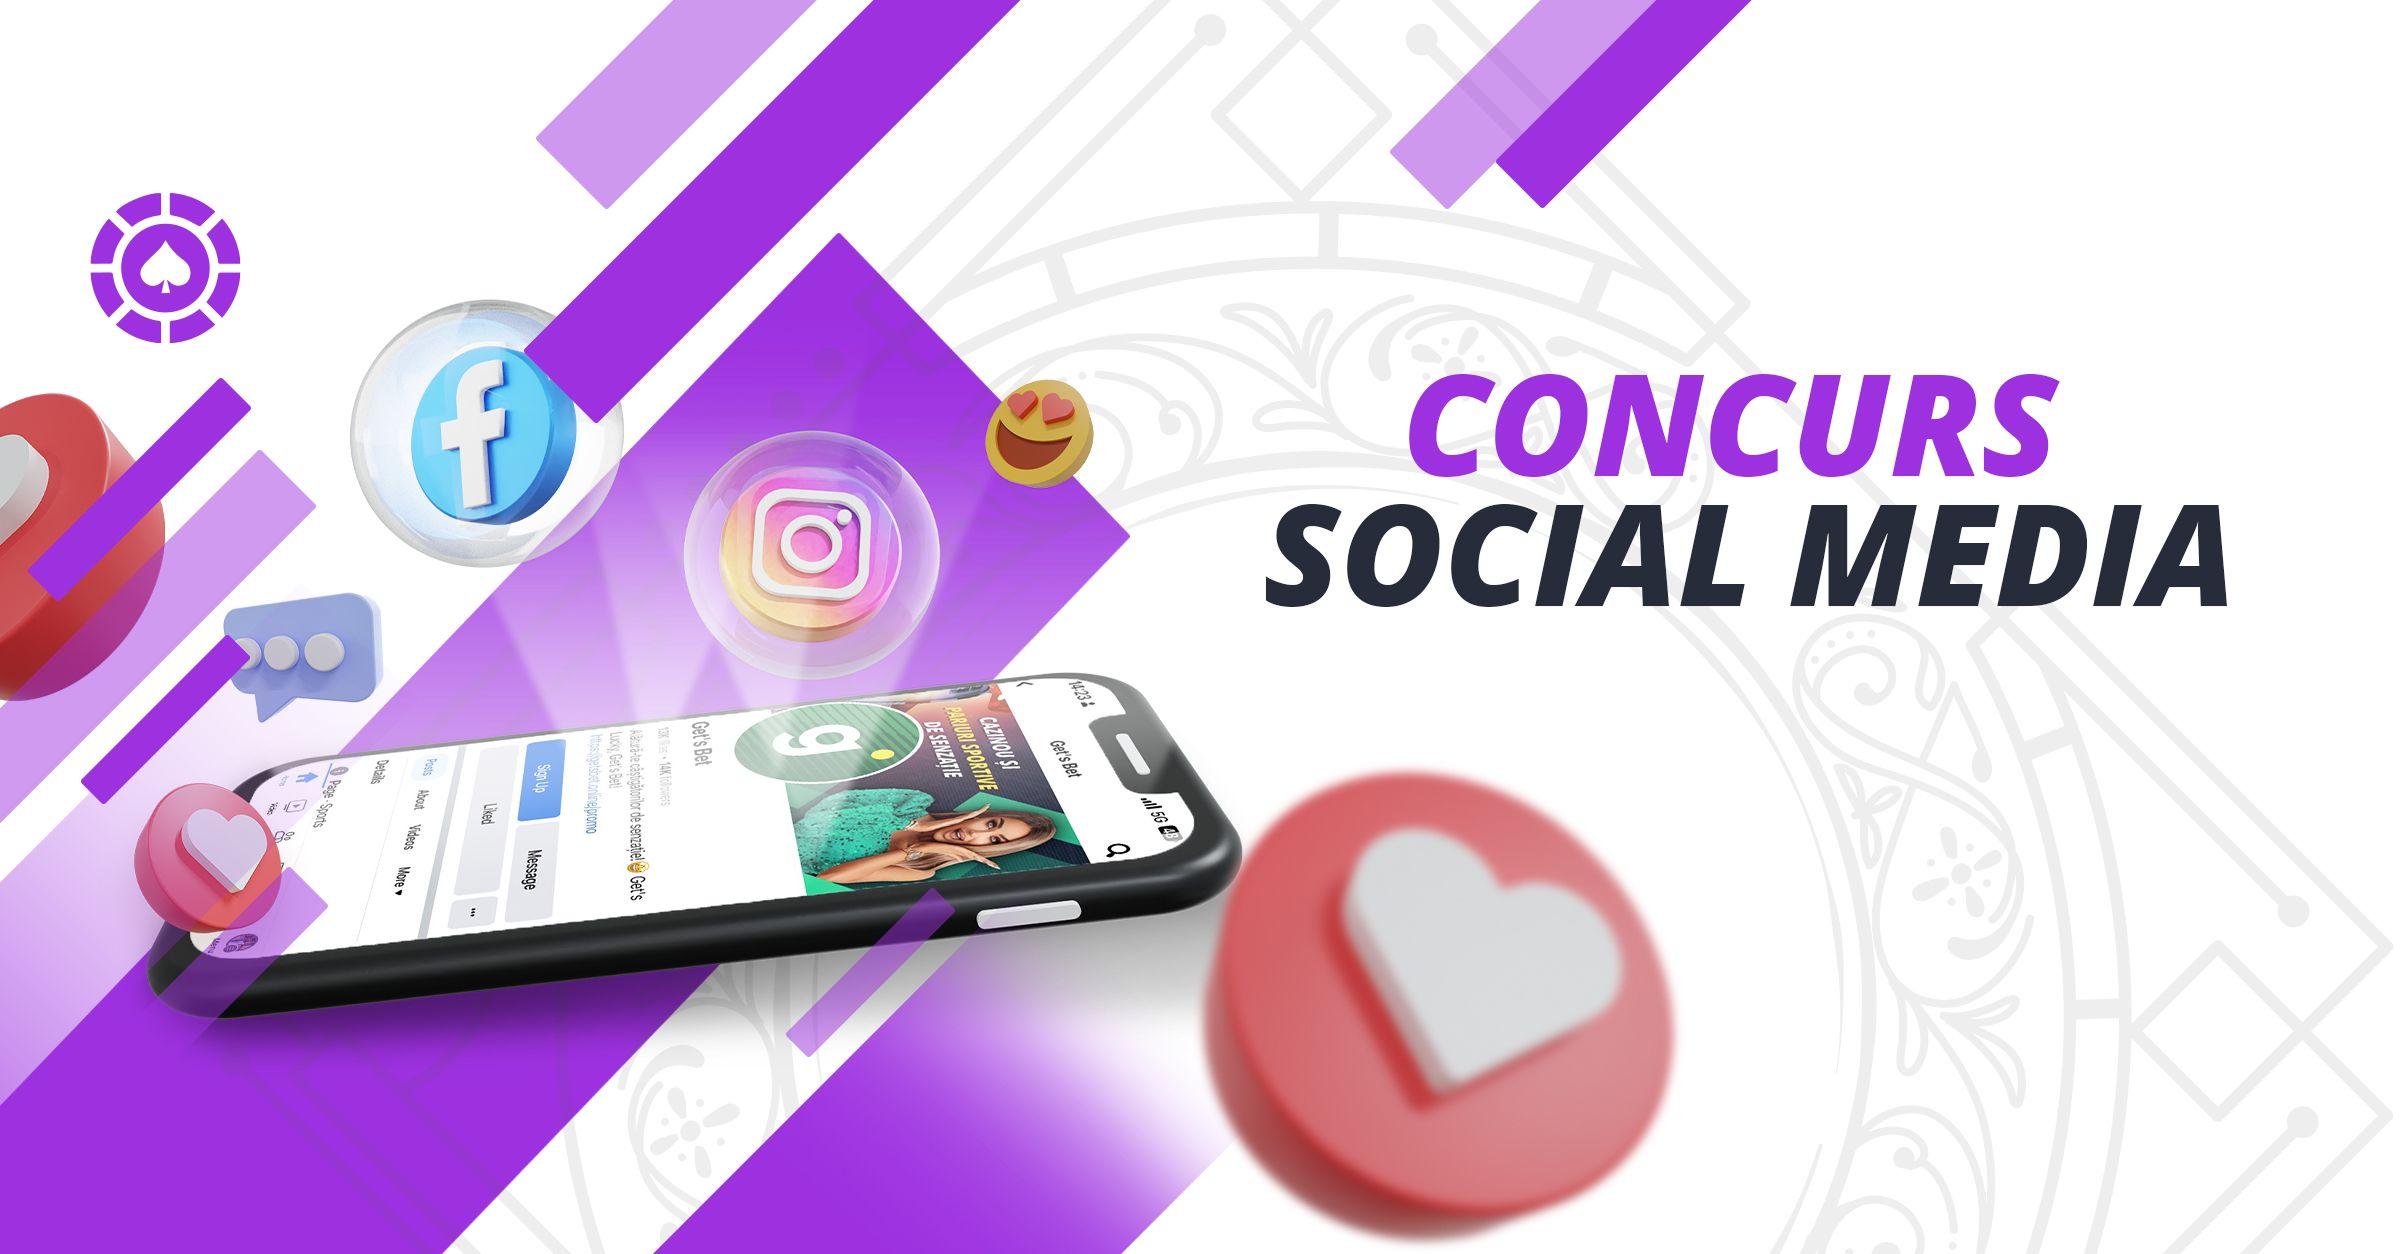 Concurs-Social-Media-2400x1254.jpg